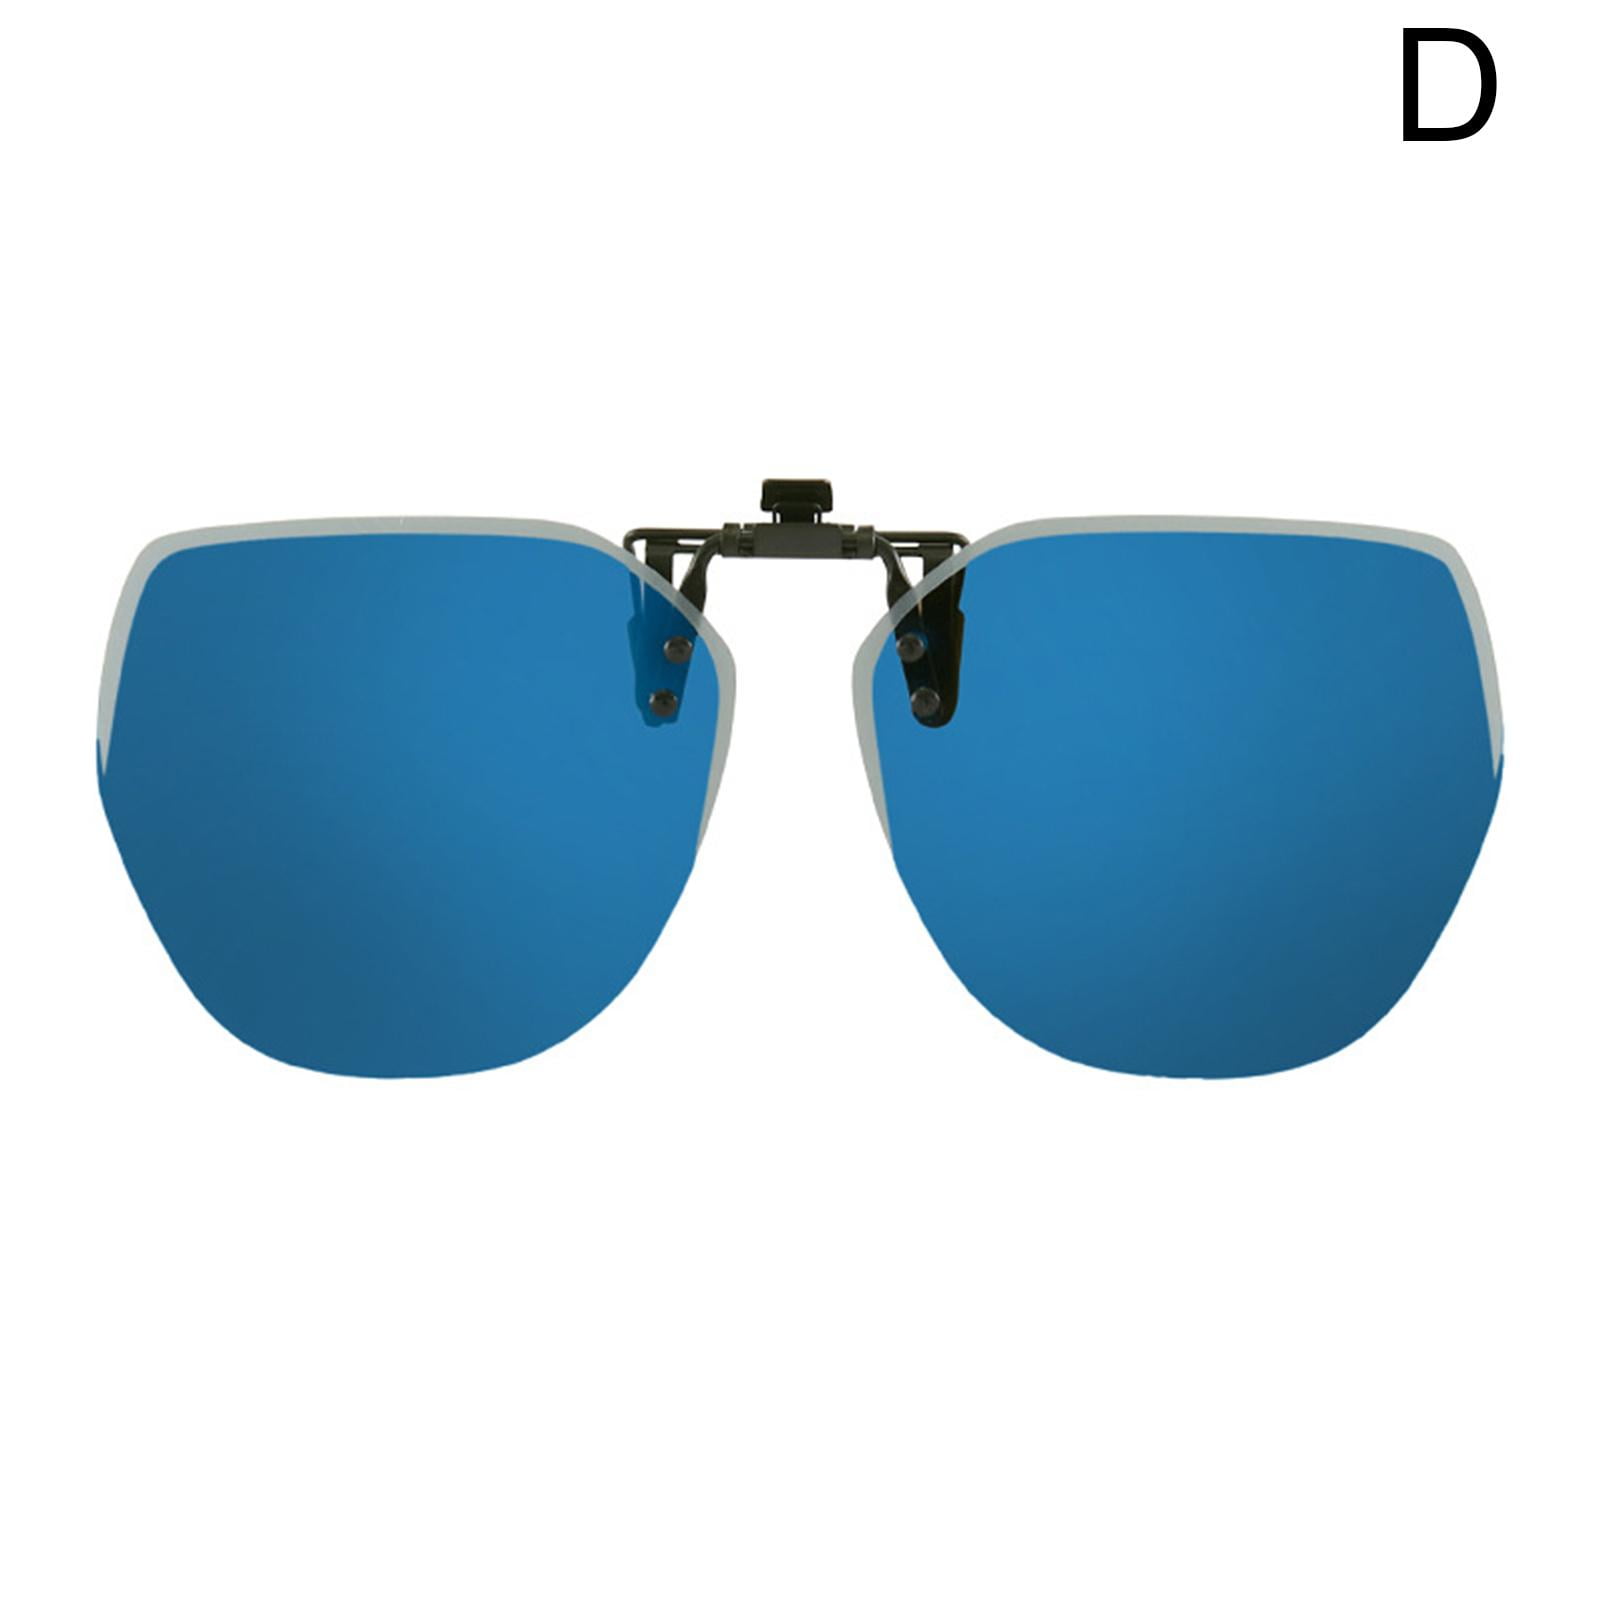 Sun Glasses, Sunglasses